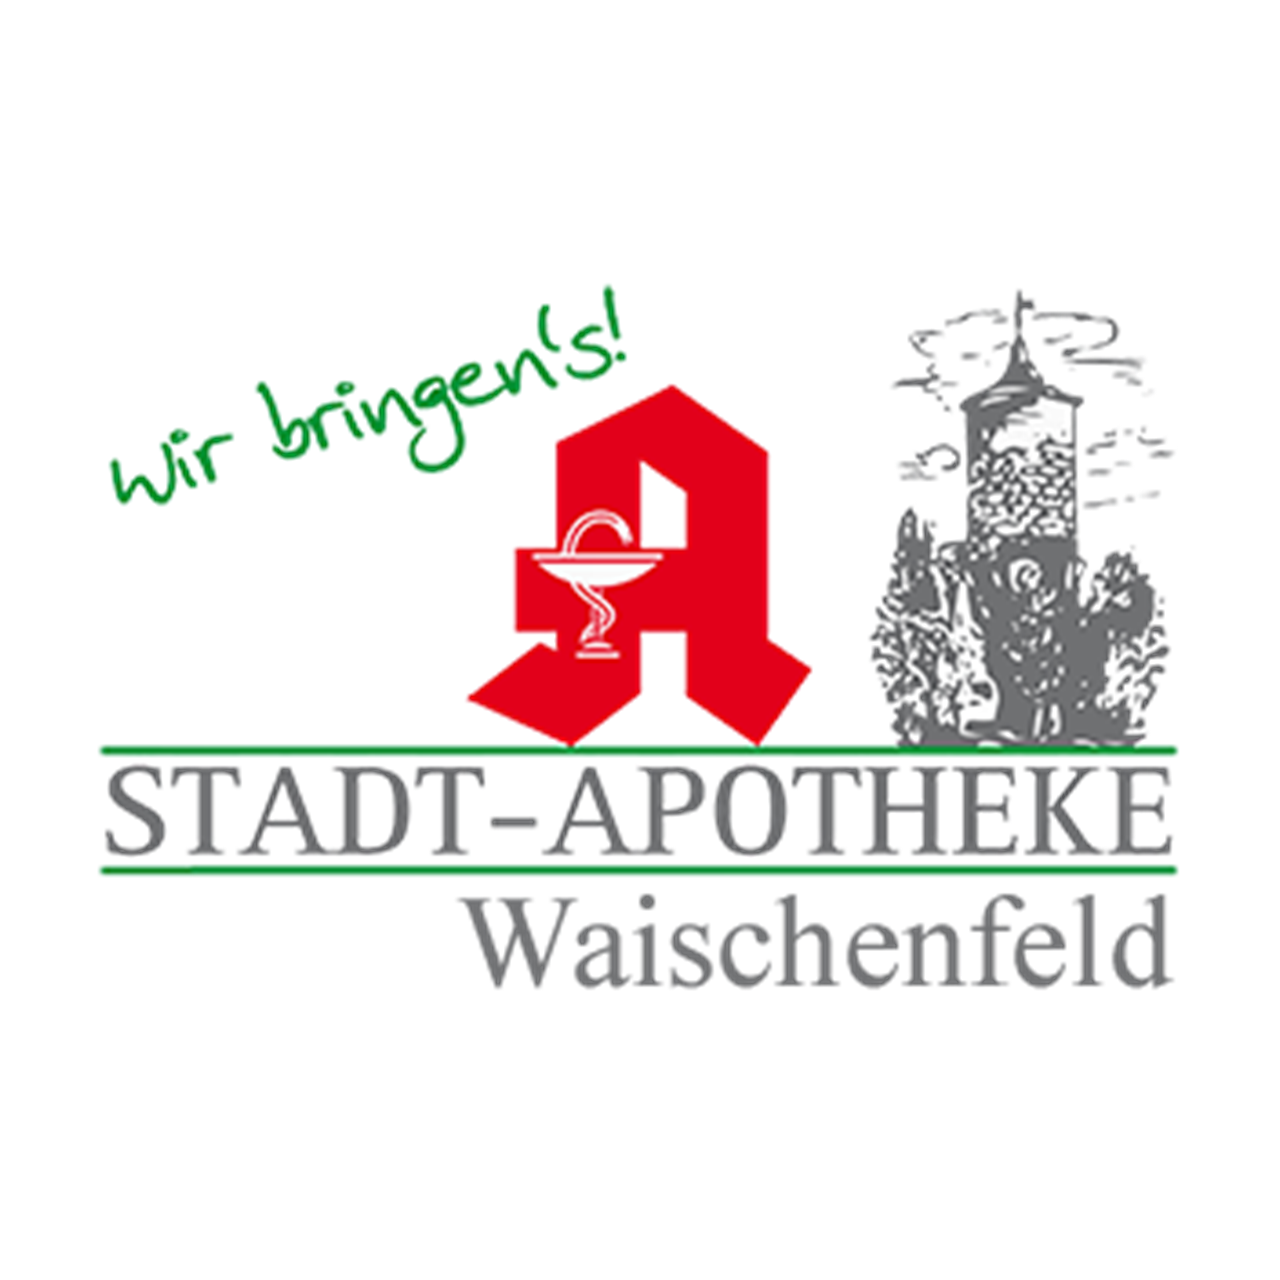 Stadt-Apotheke in Waischenfeld - Logo